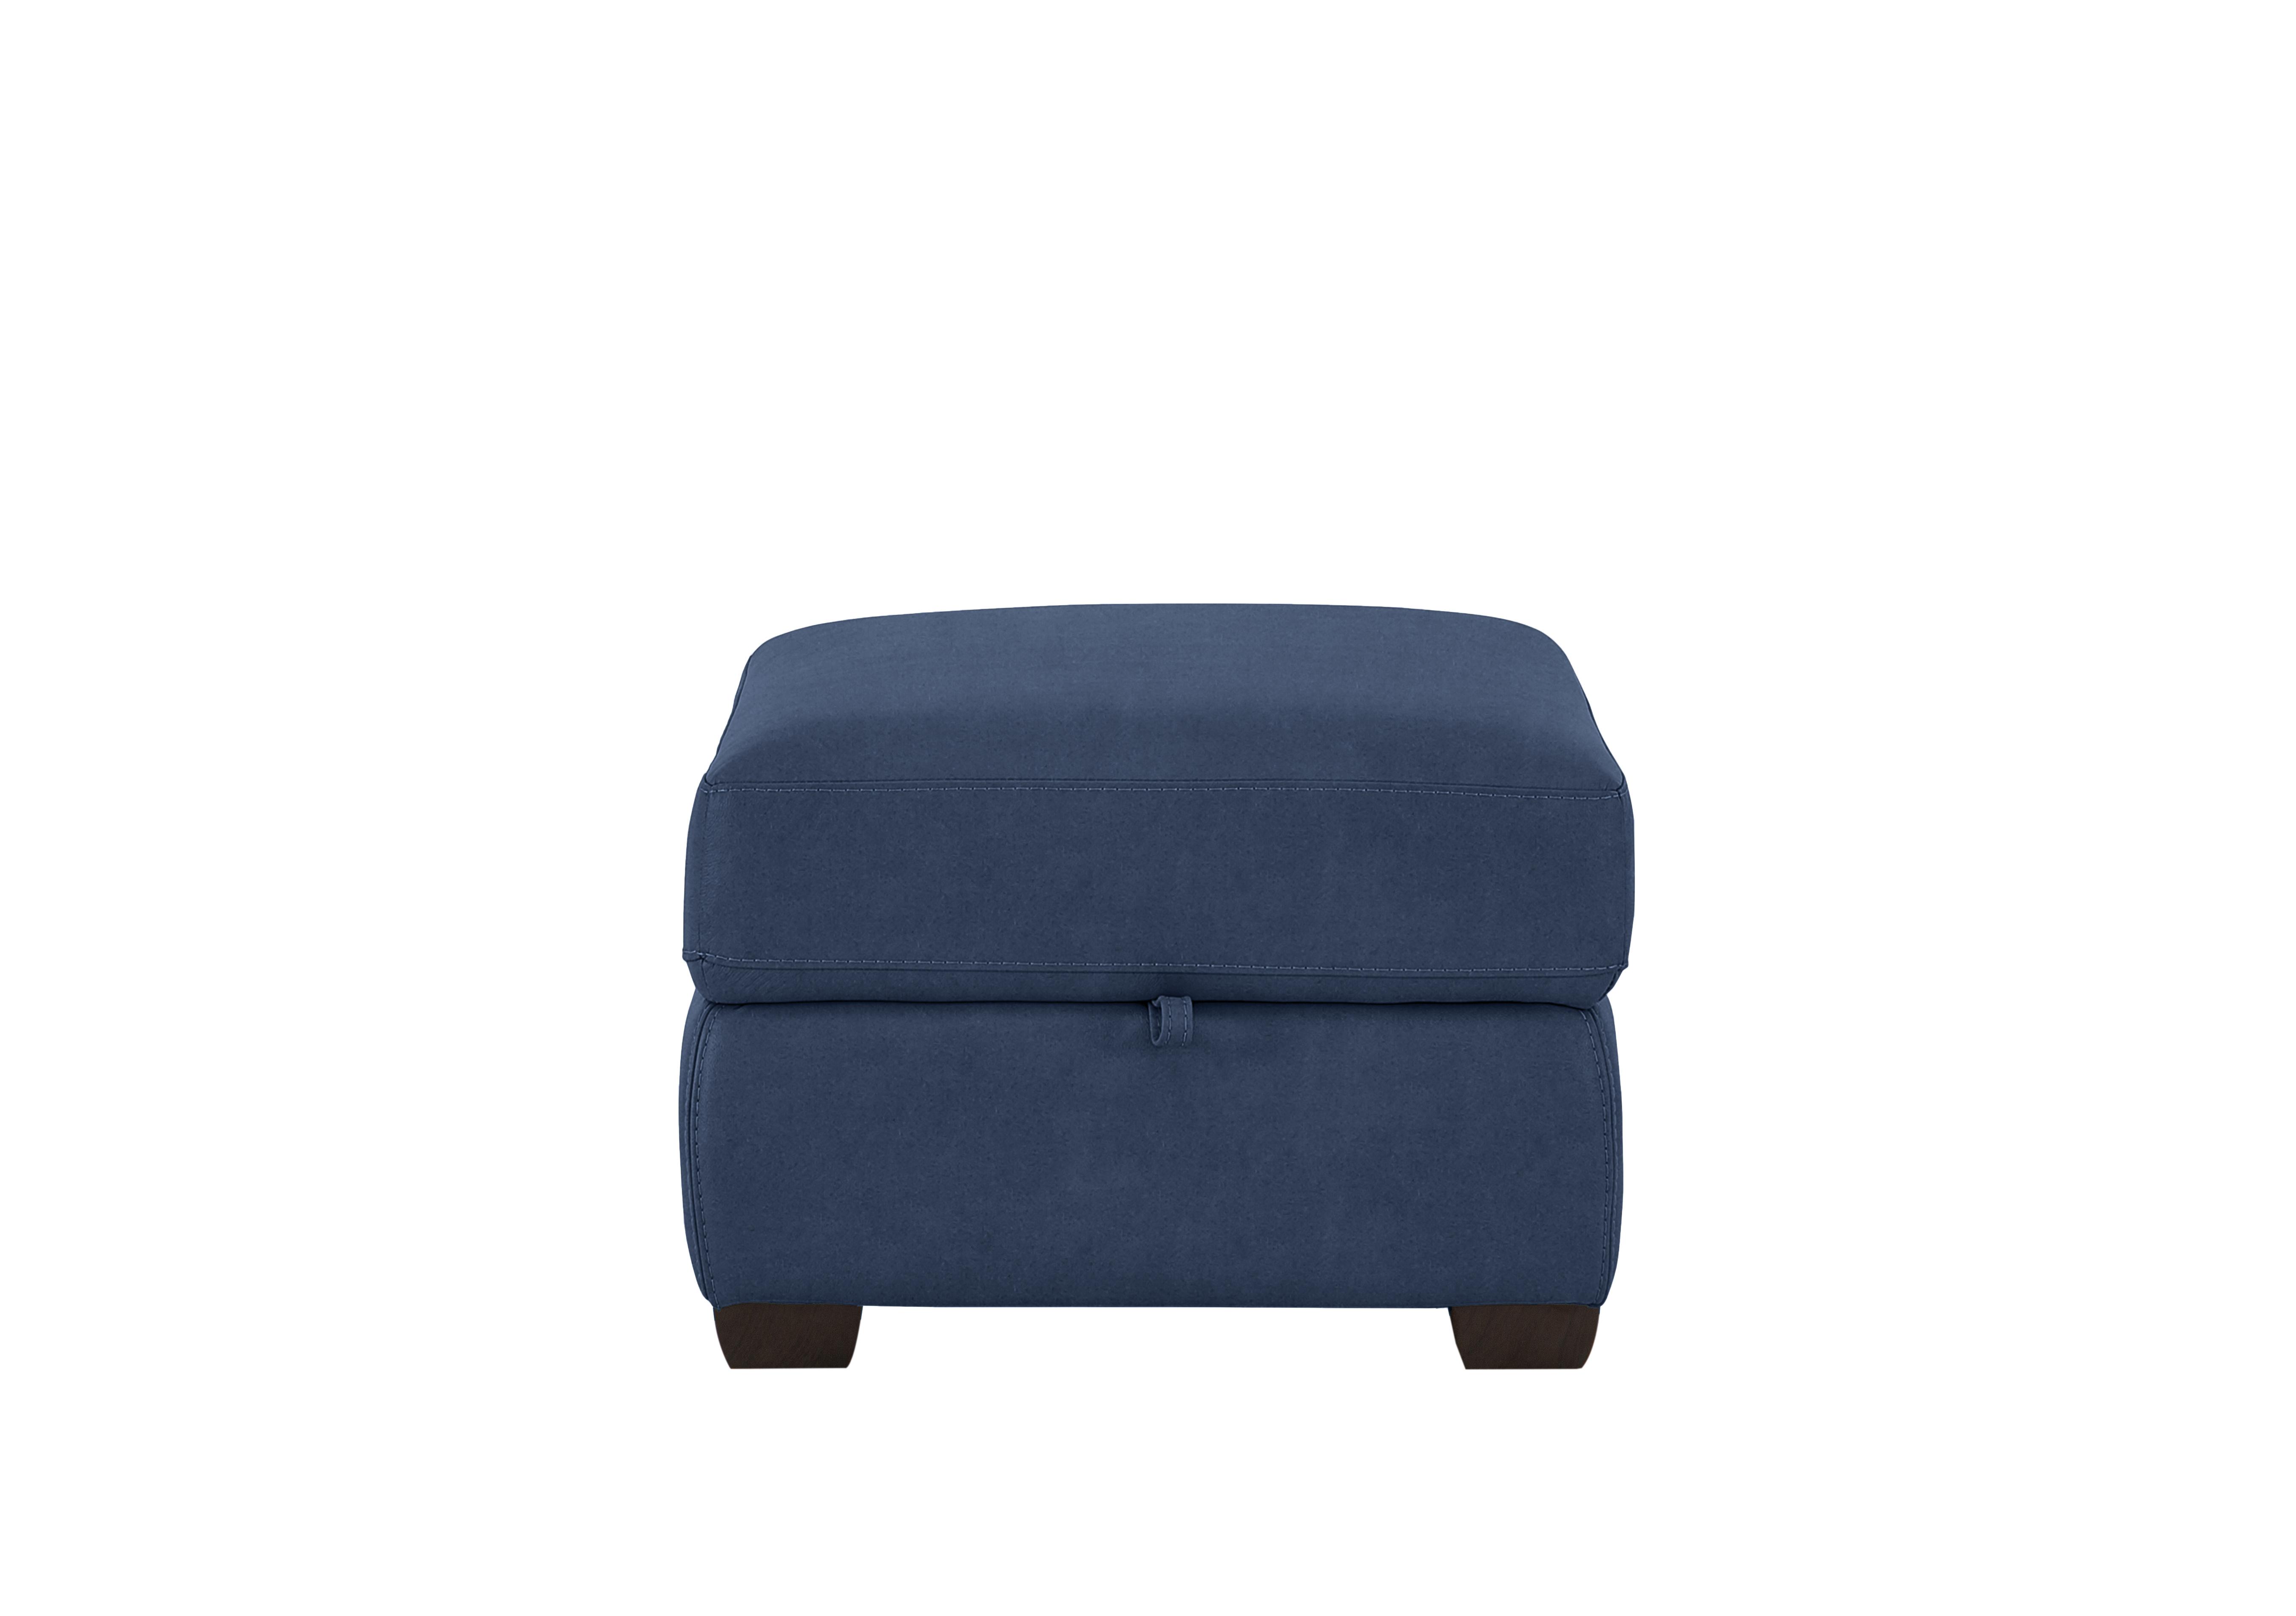 Chicago Fabric Storage Footstool in Bfa-Blj-R10 Blue on Furniture Village